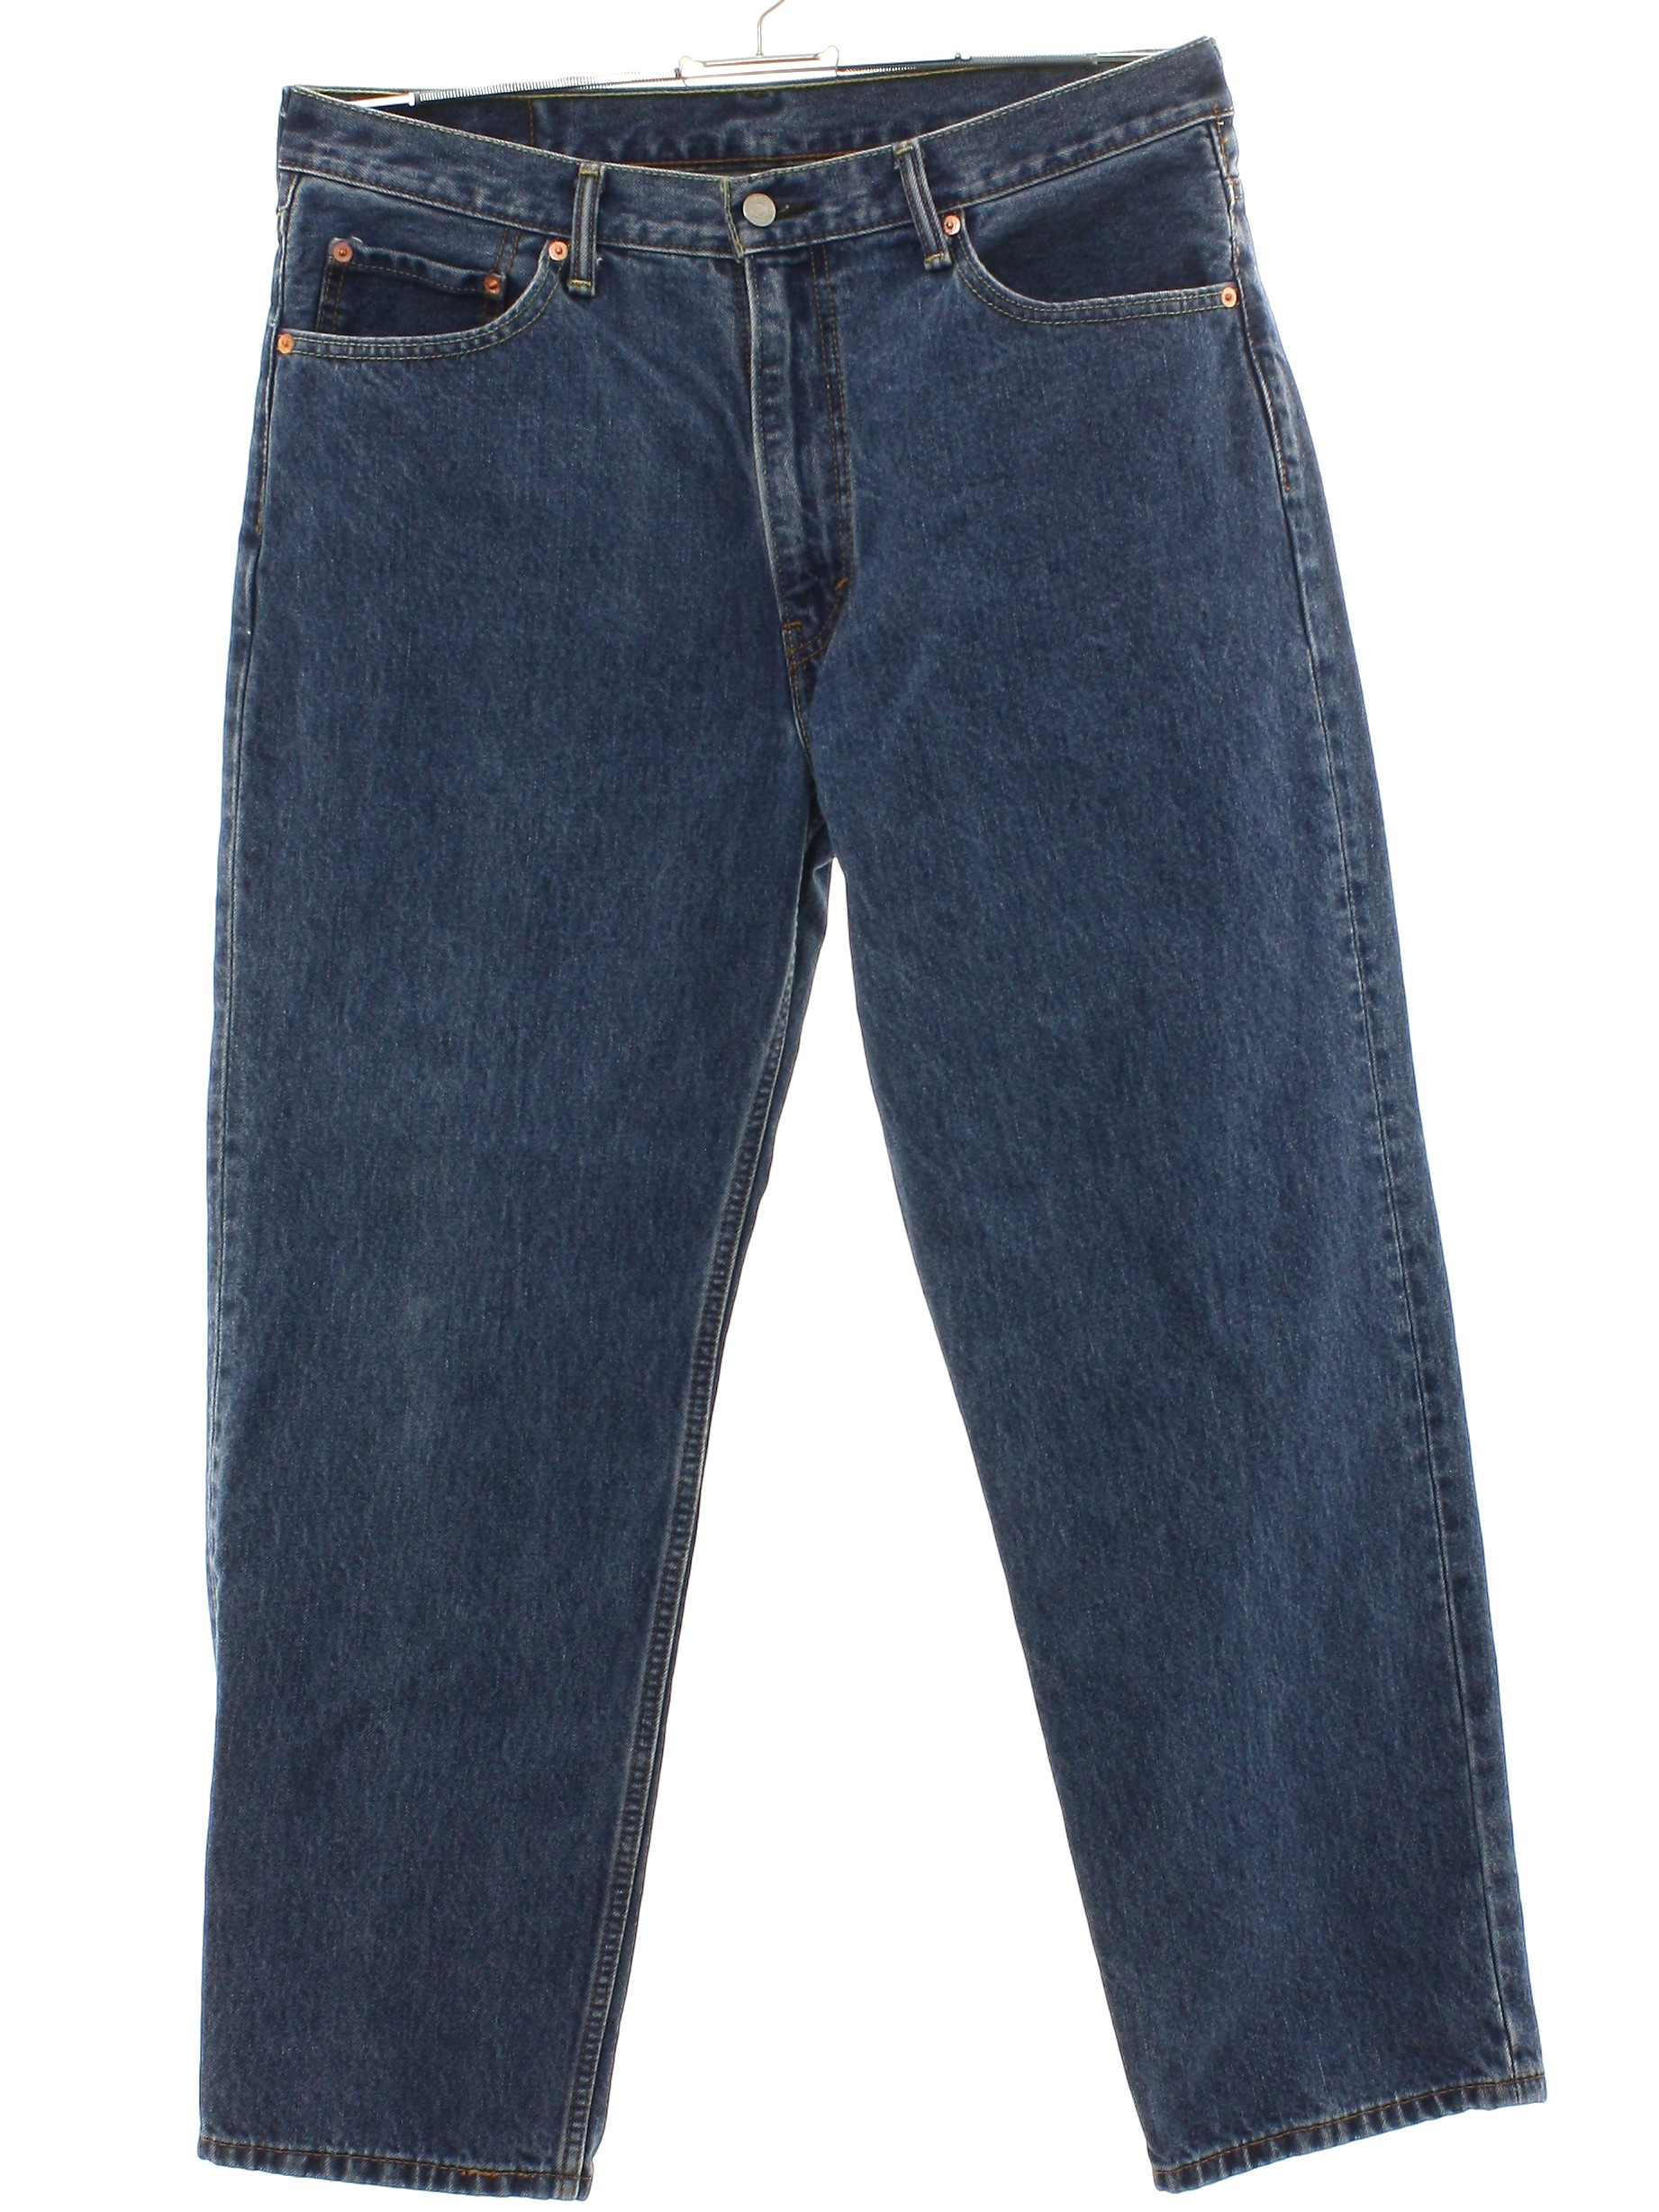 Pants: 90s -Levis 550- Mens slightly faded blue cotton denim denim ...